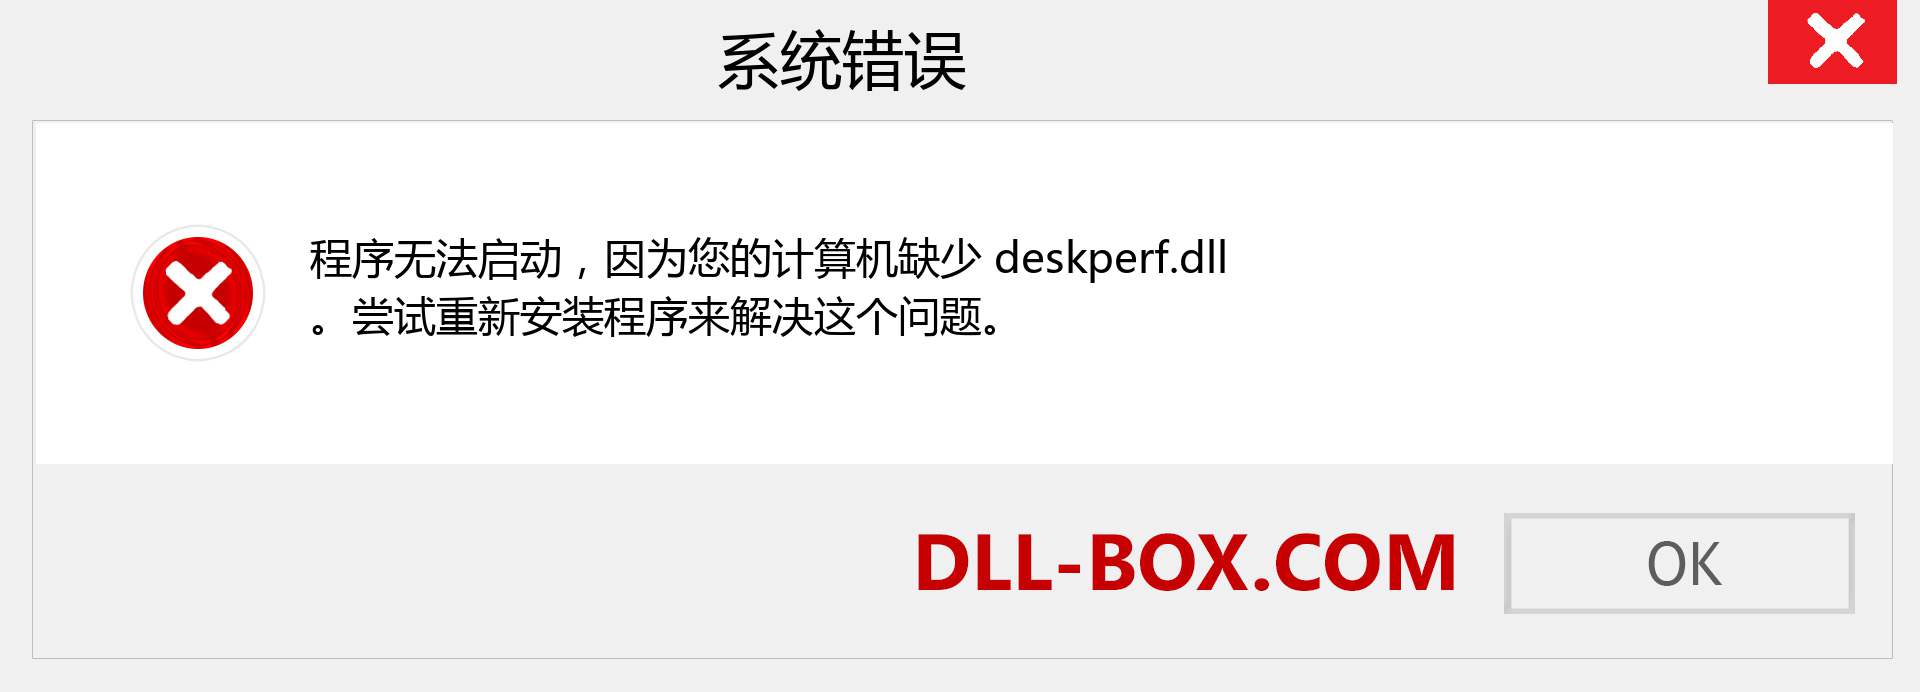 deskperf.dll 文件丢失？。 适用于 Windows 7、8、10 的下载 - 修复 Windows、照片、图像上的 deskperf dll 丢失错误